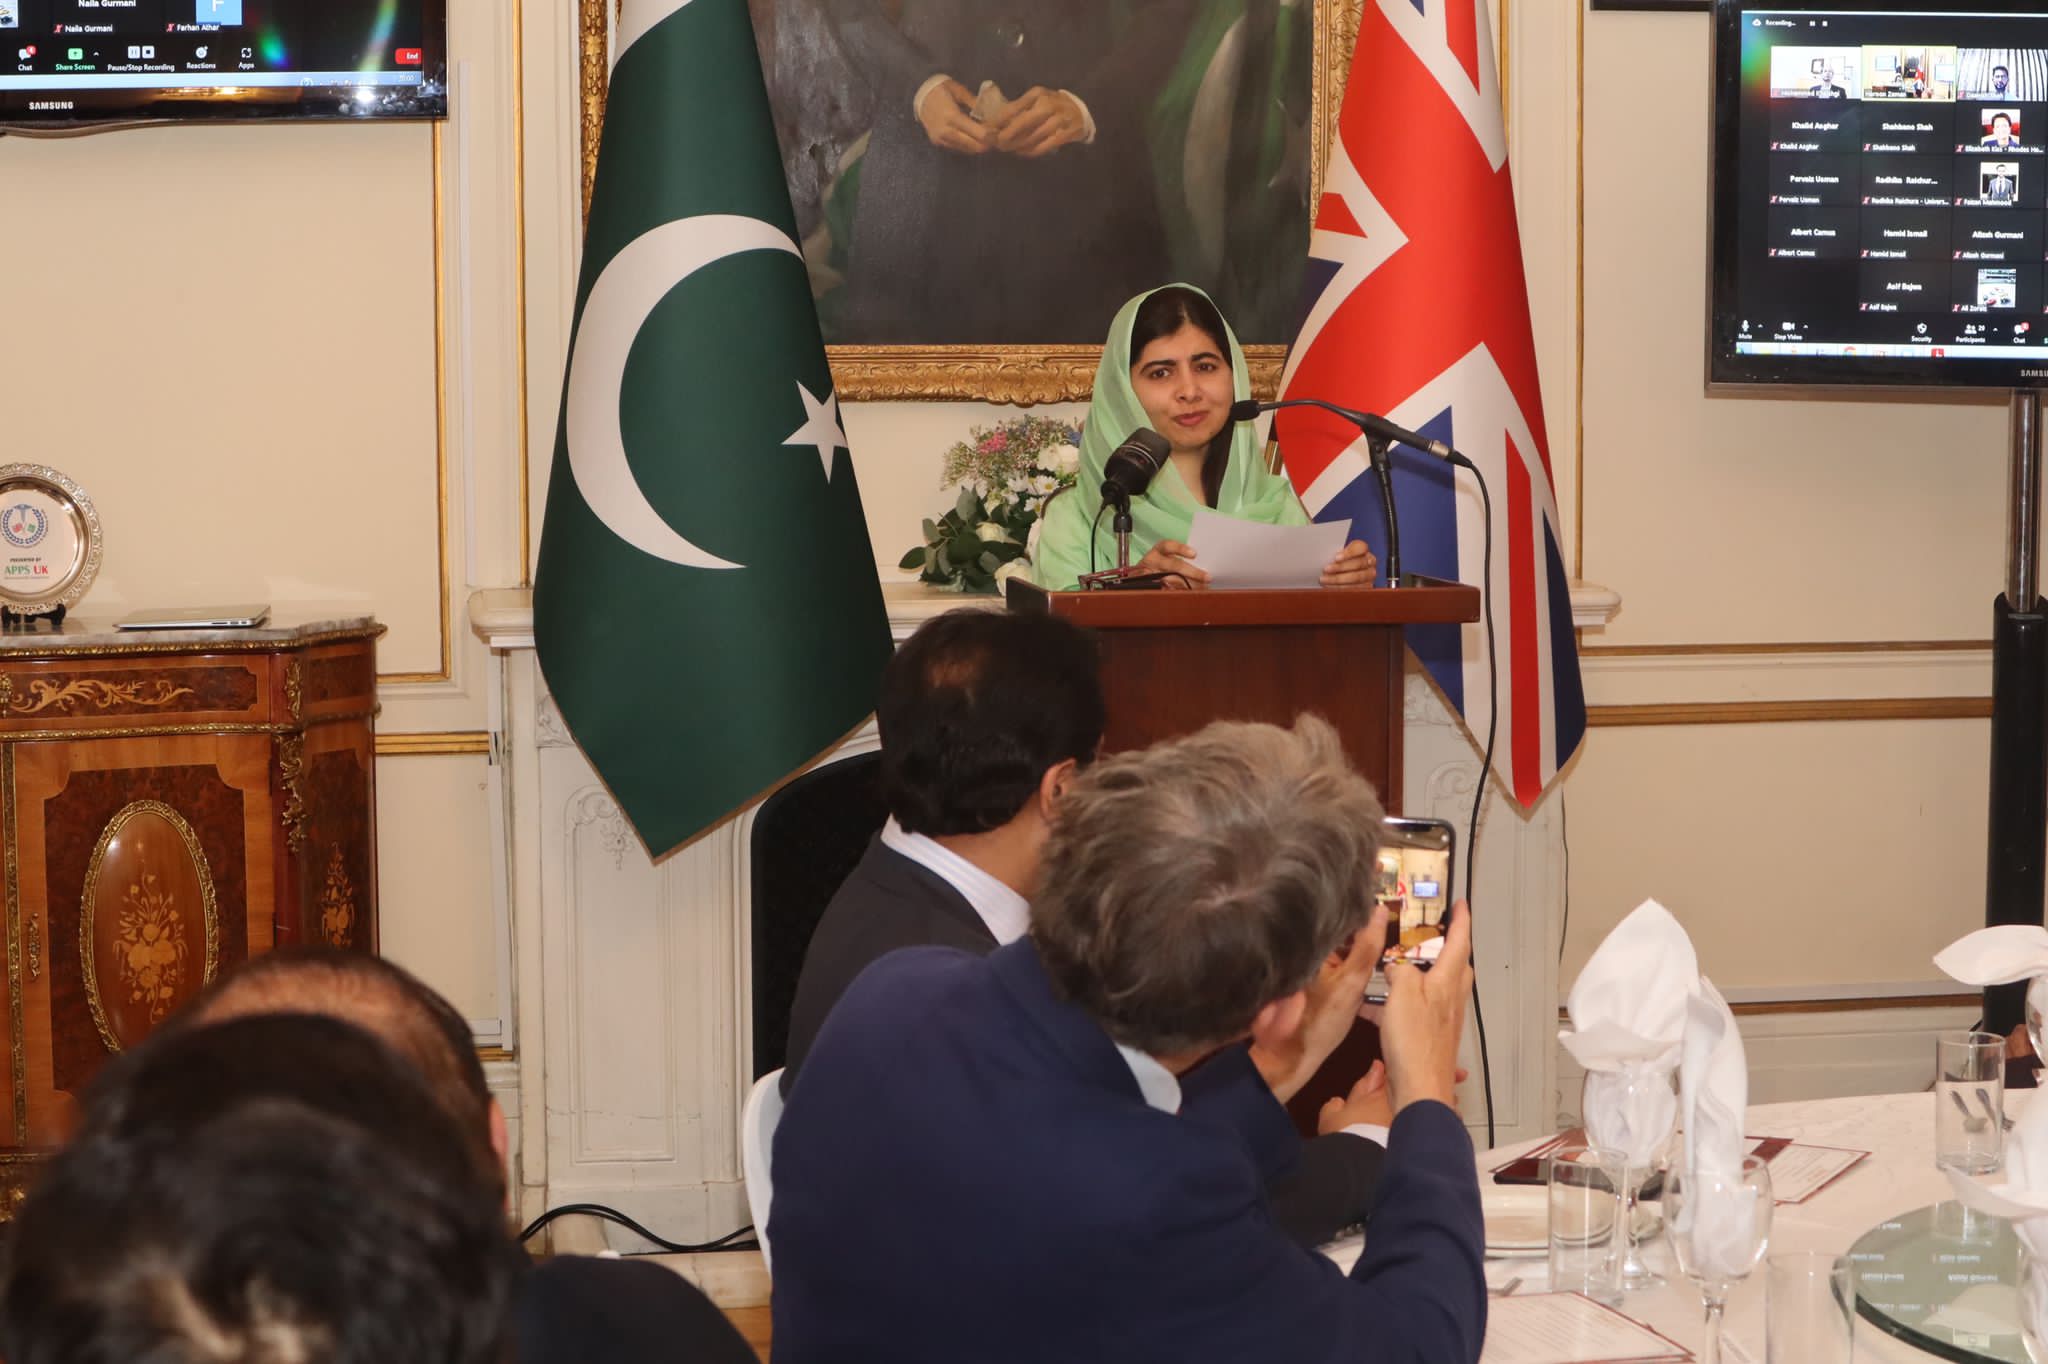 Malala Yousafzai giving a speech at the Oxford Pakistan Programme launch